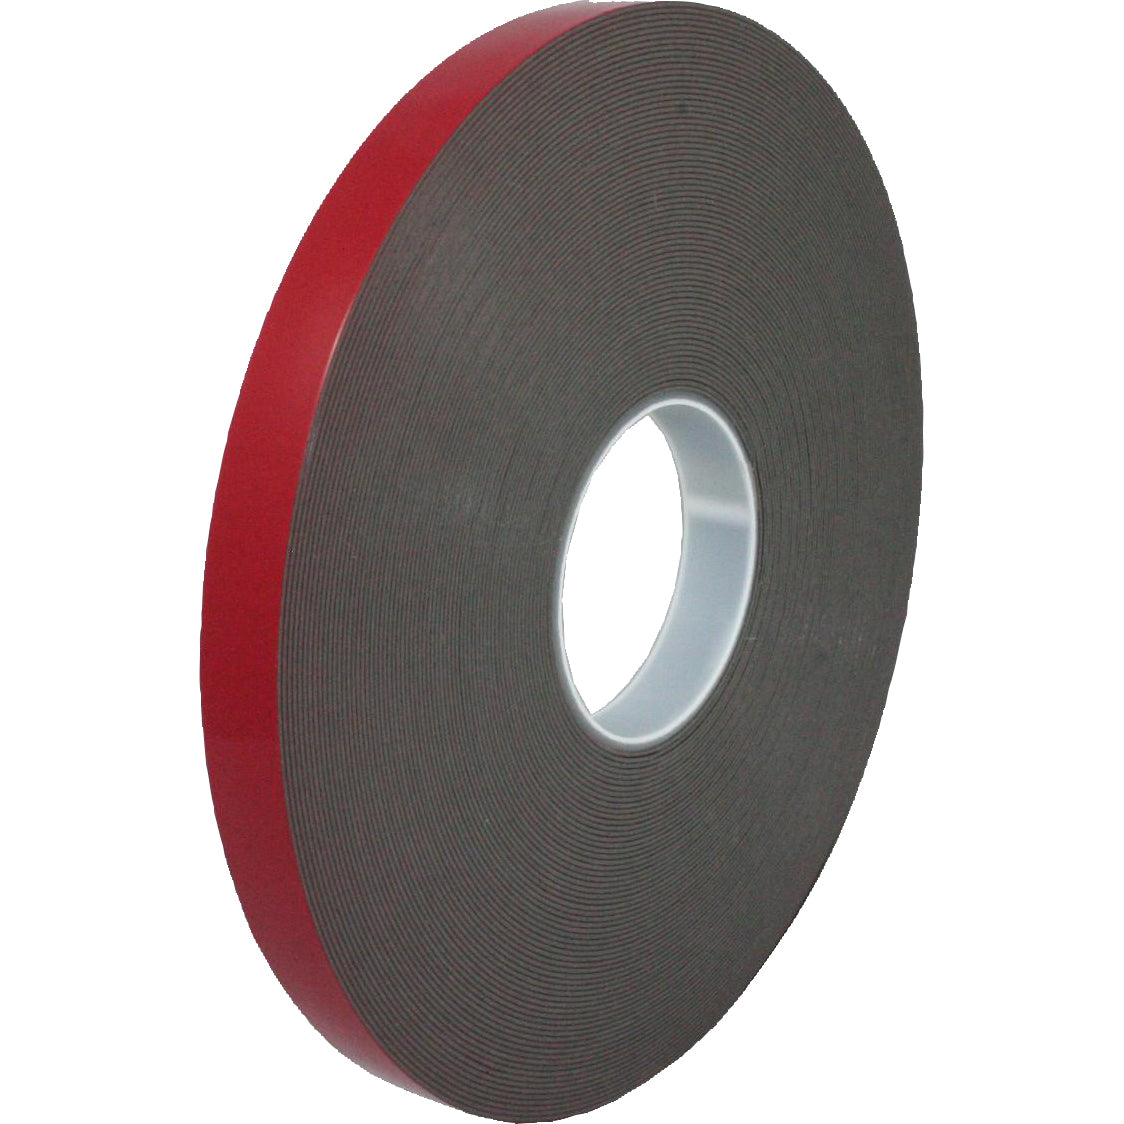 AFTC® Silvertape™ LSE 6408 Tape, grey, 0.8 mm